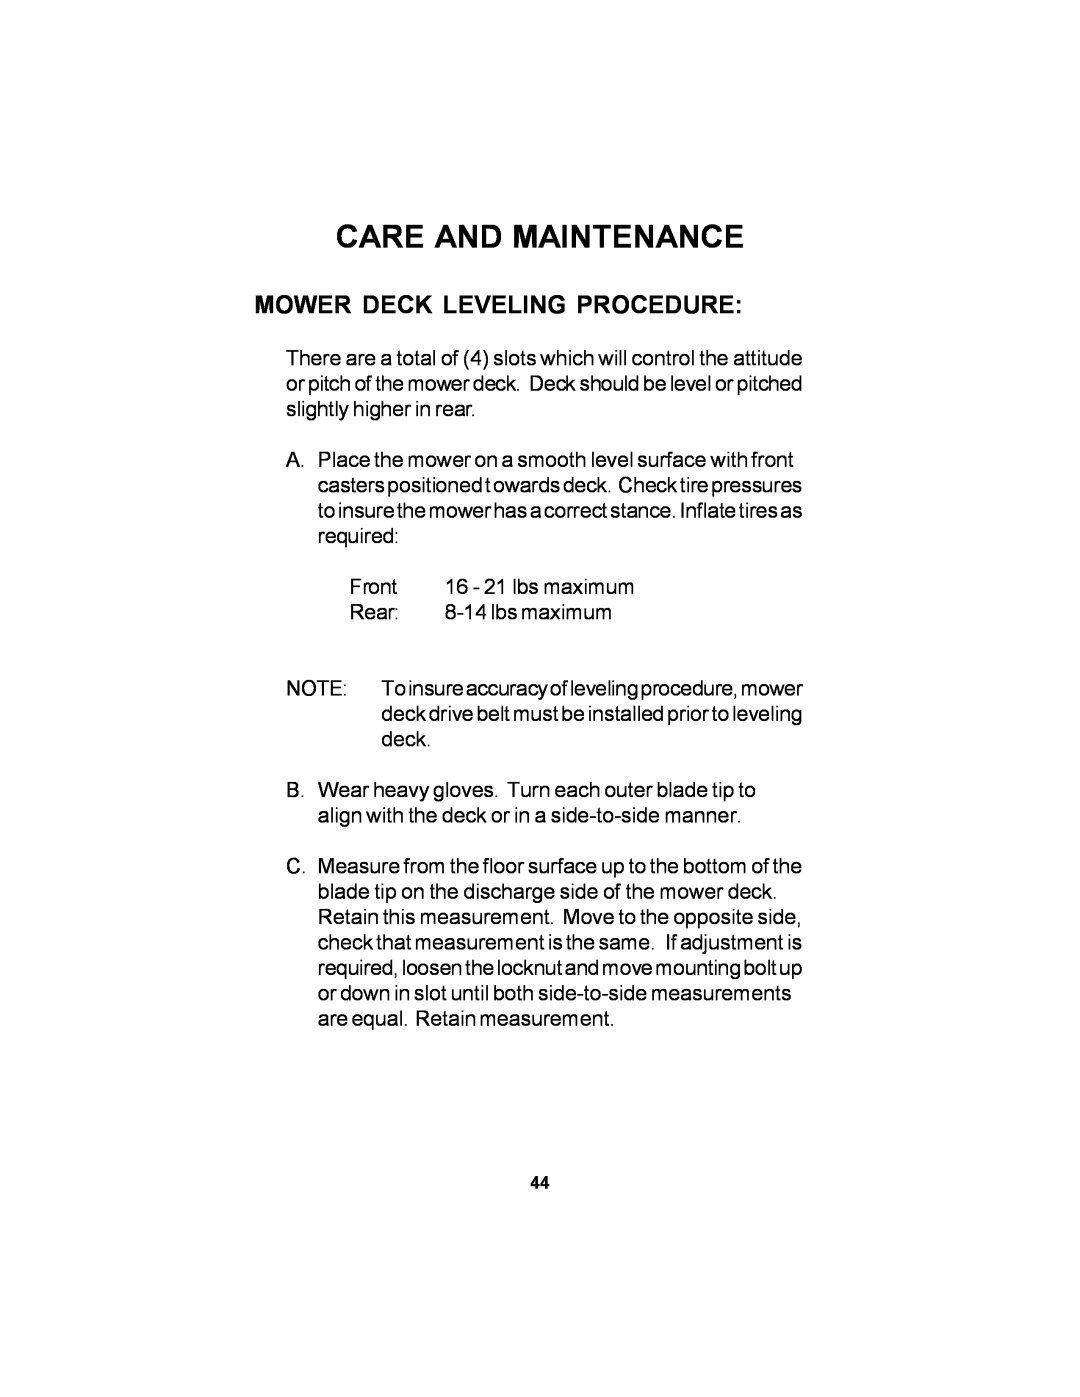 Dixon Black Bear manual Mower Deck Leveling Procedure, Care And Maintenance 